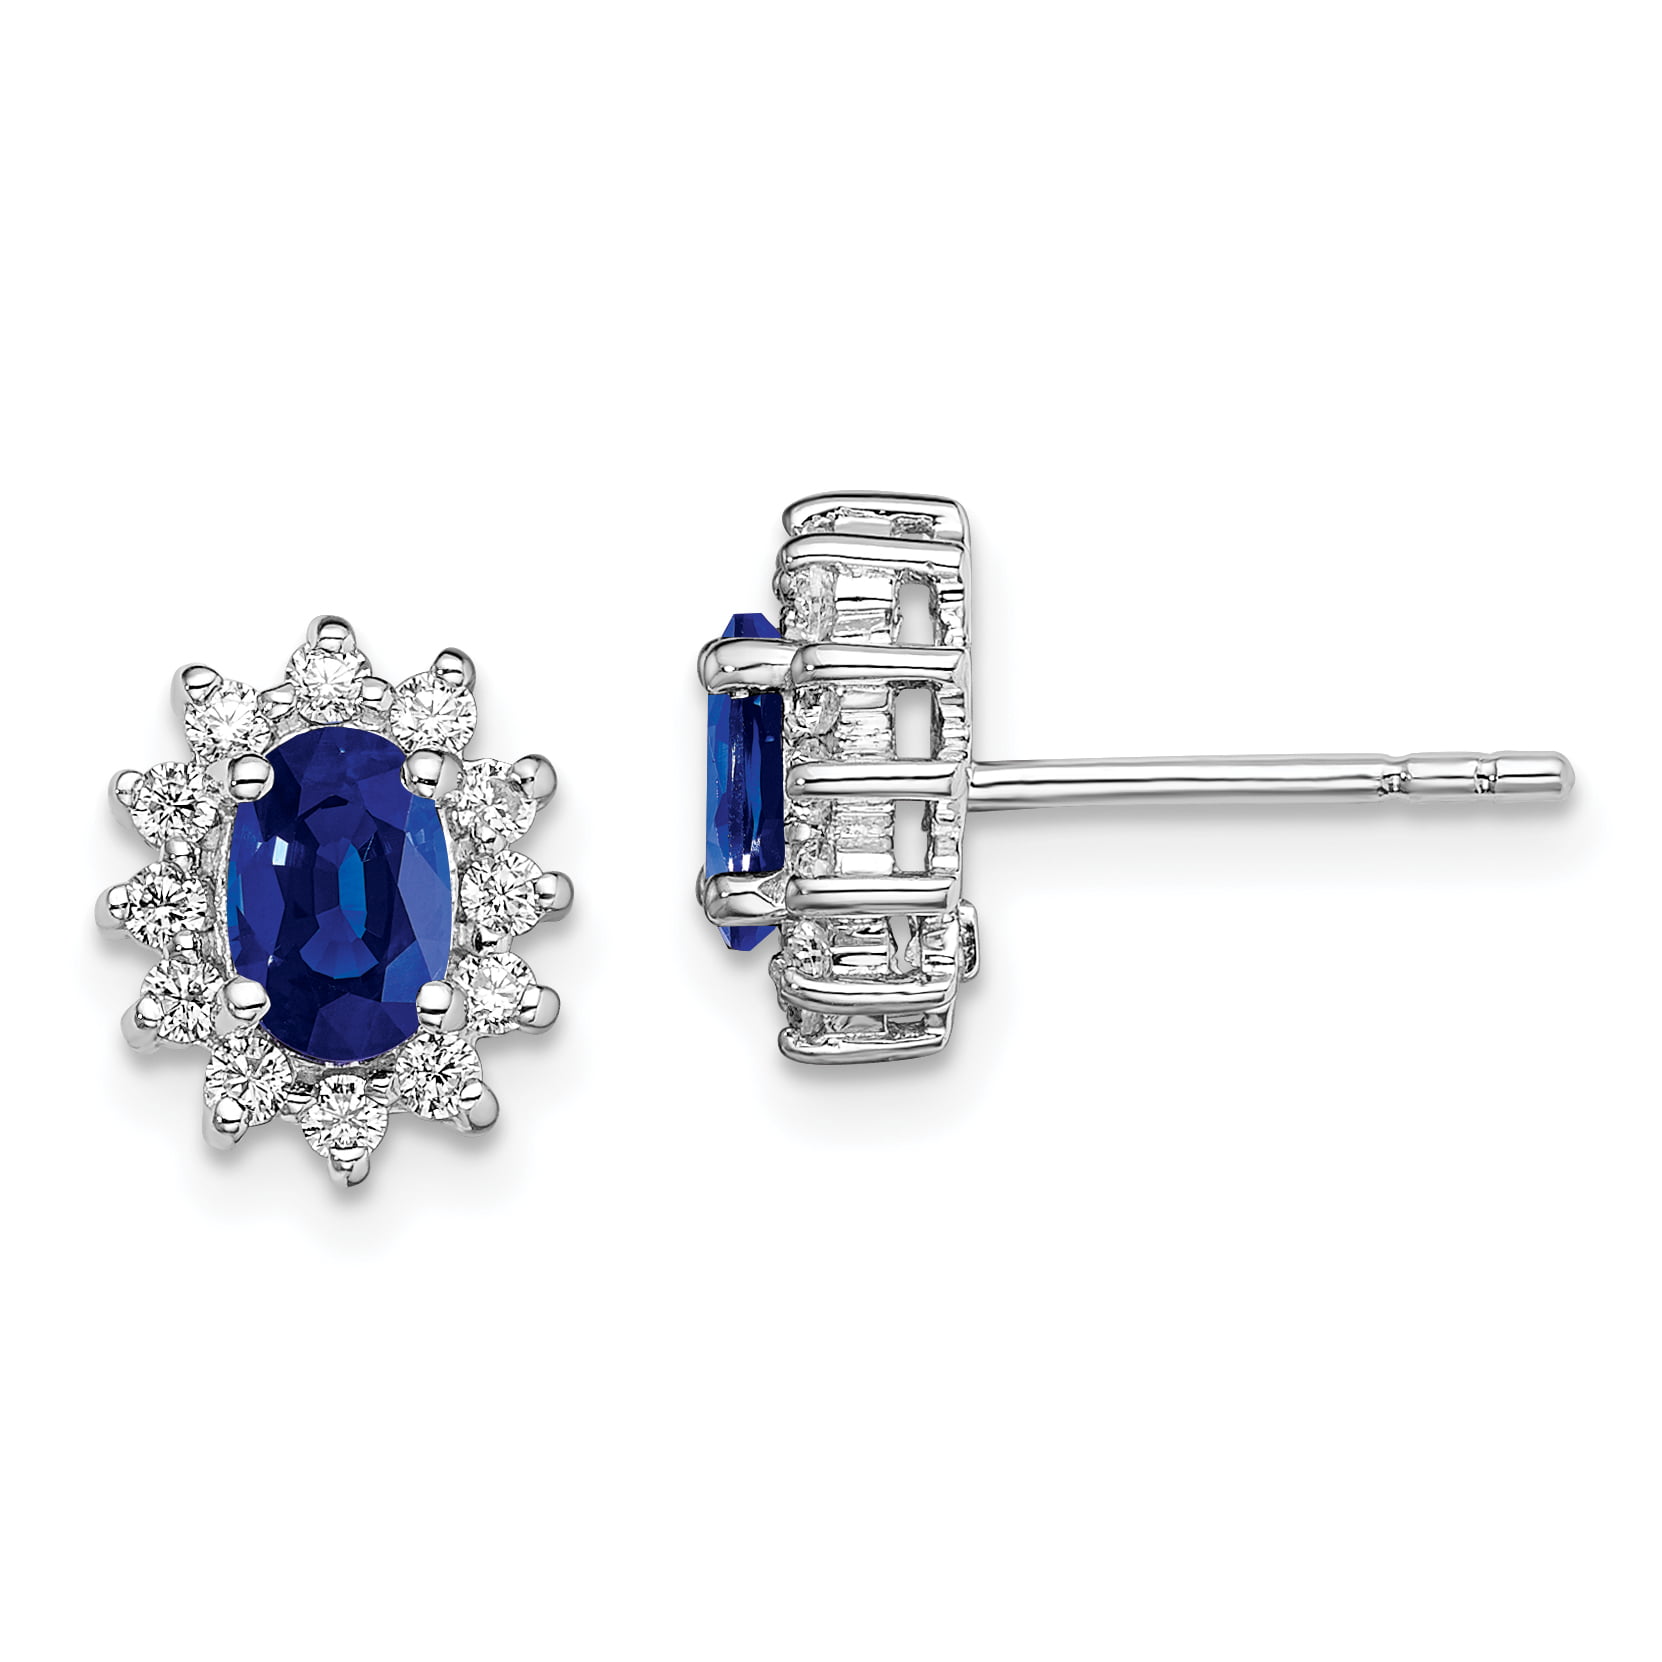 Sapphire Earrings Gemstone Earrings September Birthstone Earrings Silver and Sapphire Sapphire Studs Sterling Silver Gift Ideas